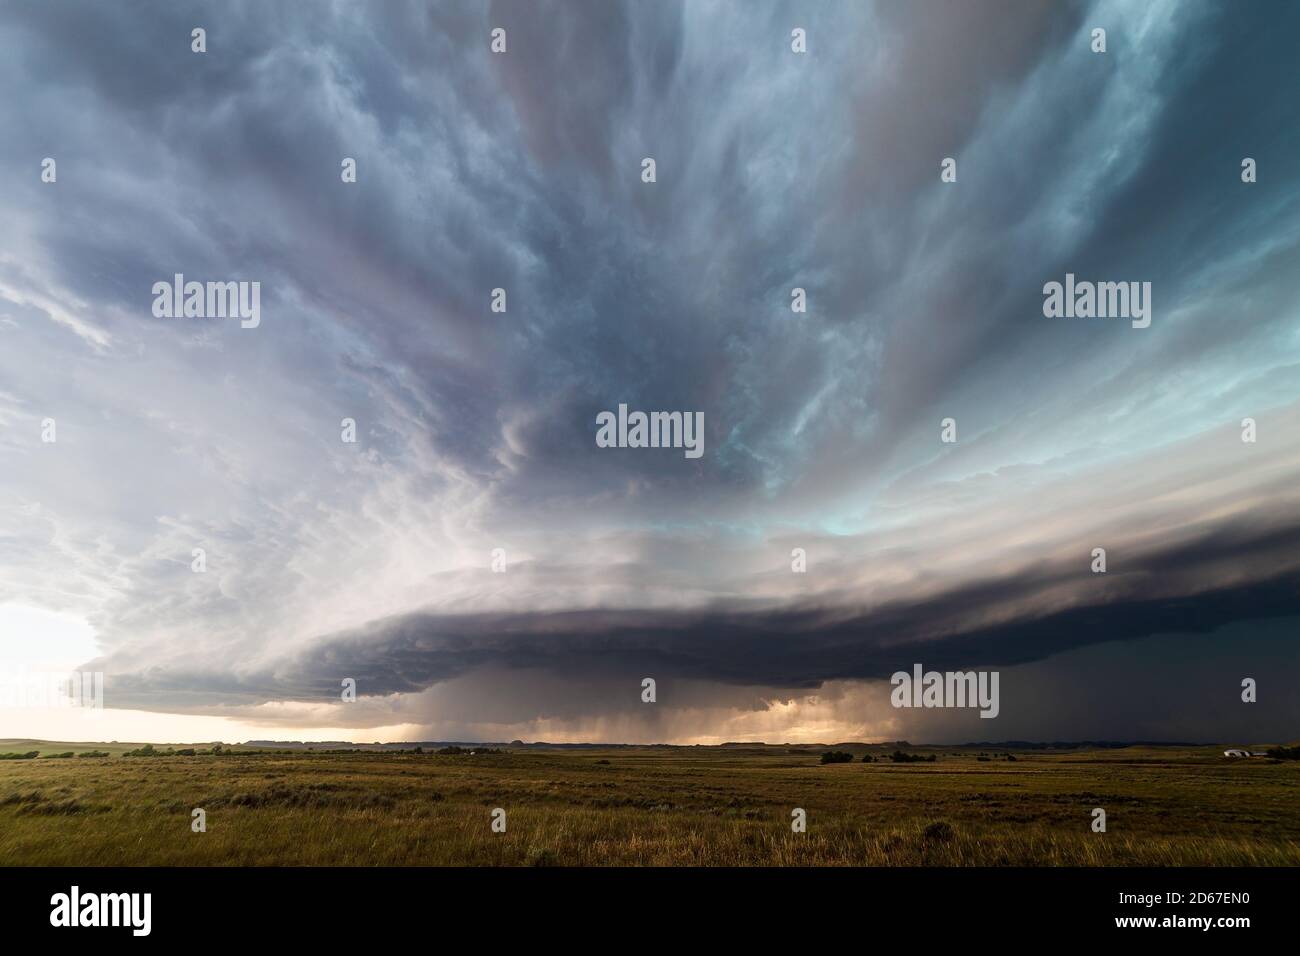 Derecho storm with a shelf cloud (arcus) Broadus, Montana, USA Stock Photo